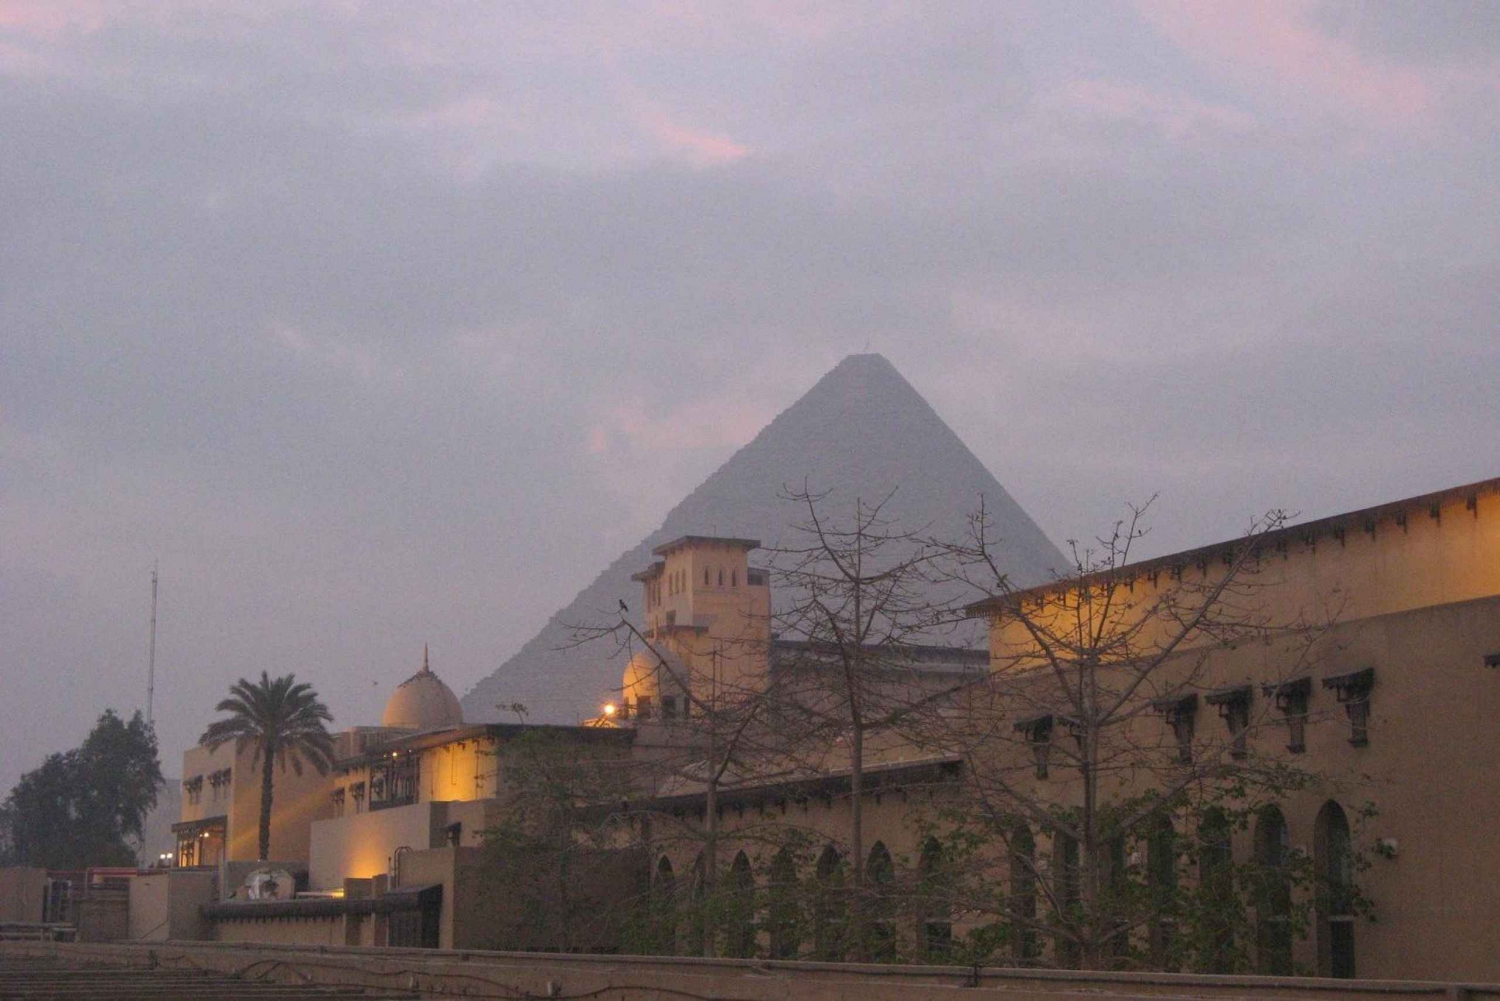 Hurghada: Cairo Highlights Tour To Giza Pyramids, Eg Museum